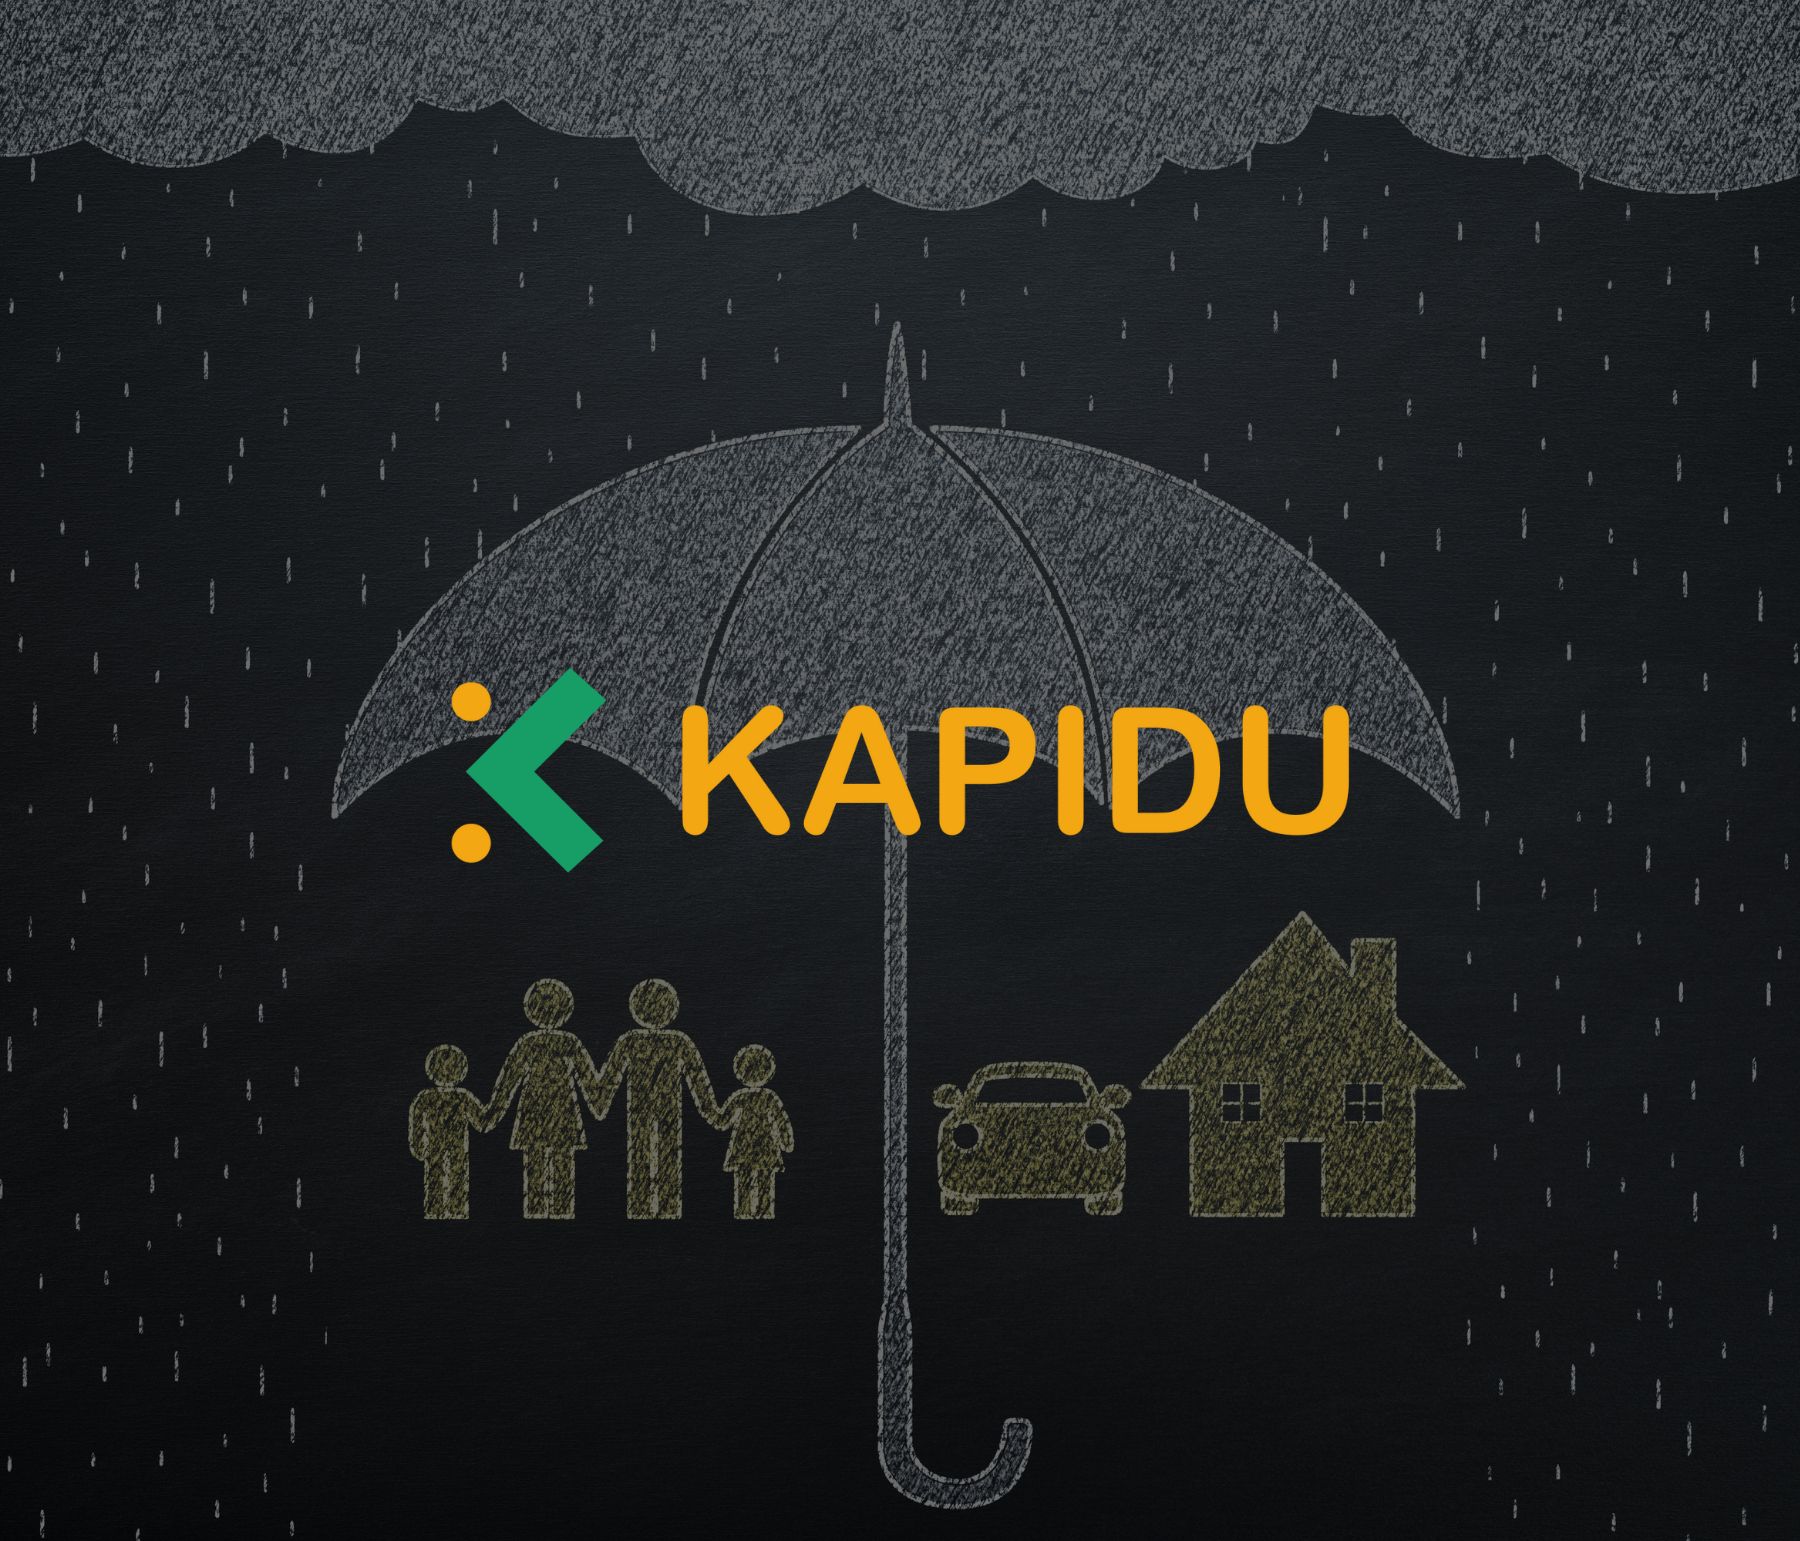 About Kapidu